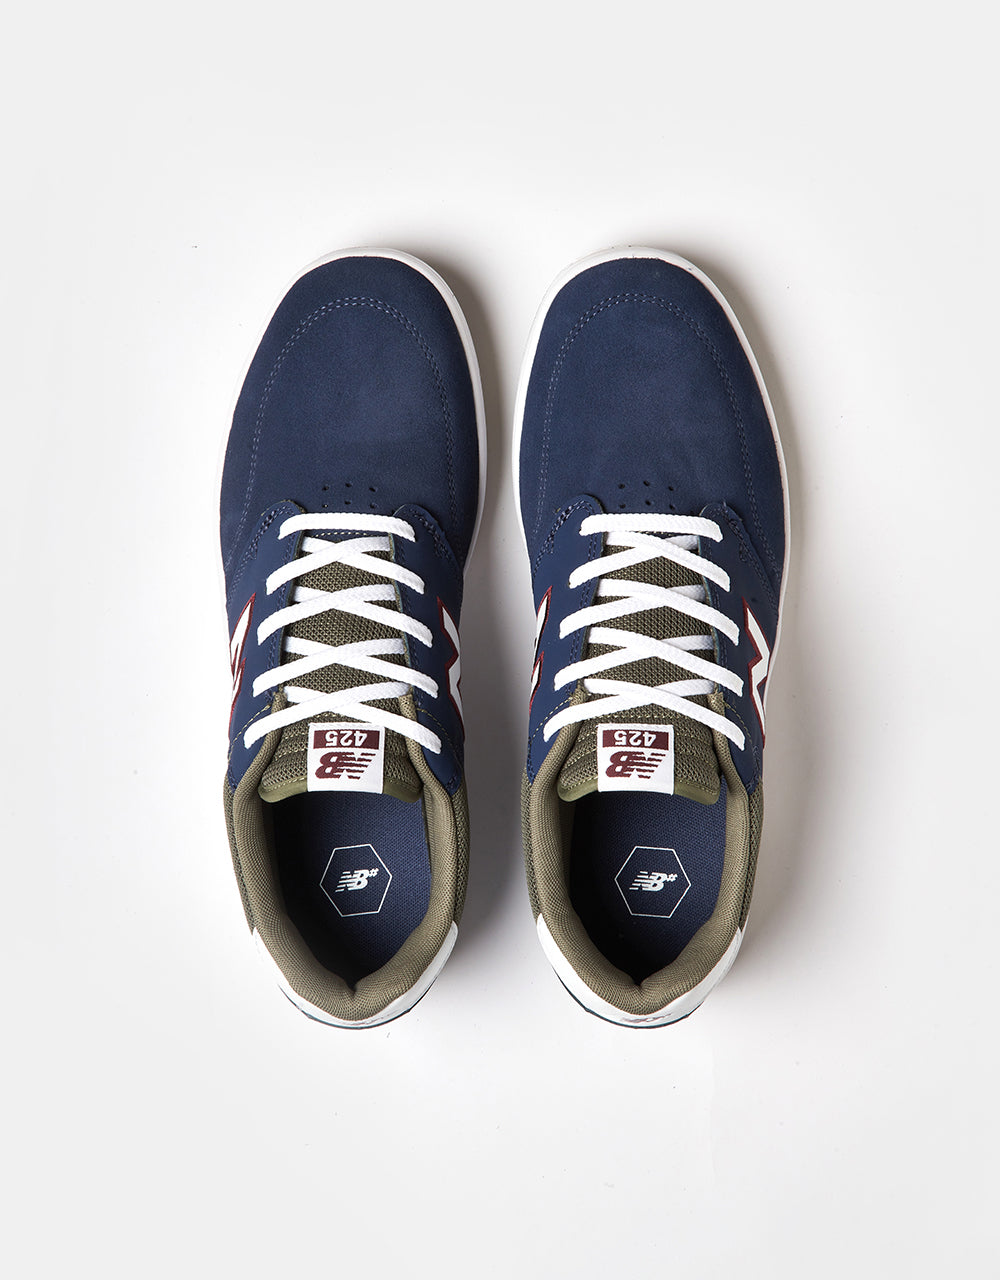 New Balance Numeric 425 Skate Shoes - Navy/Olive